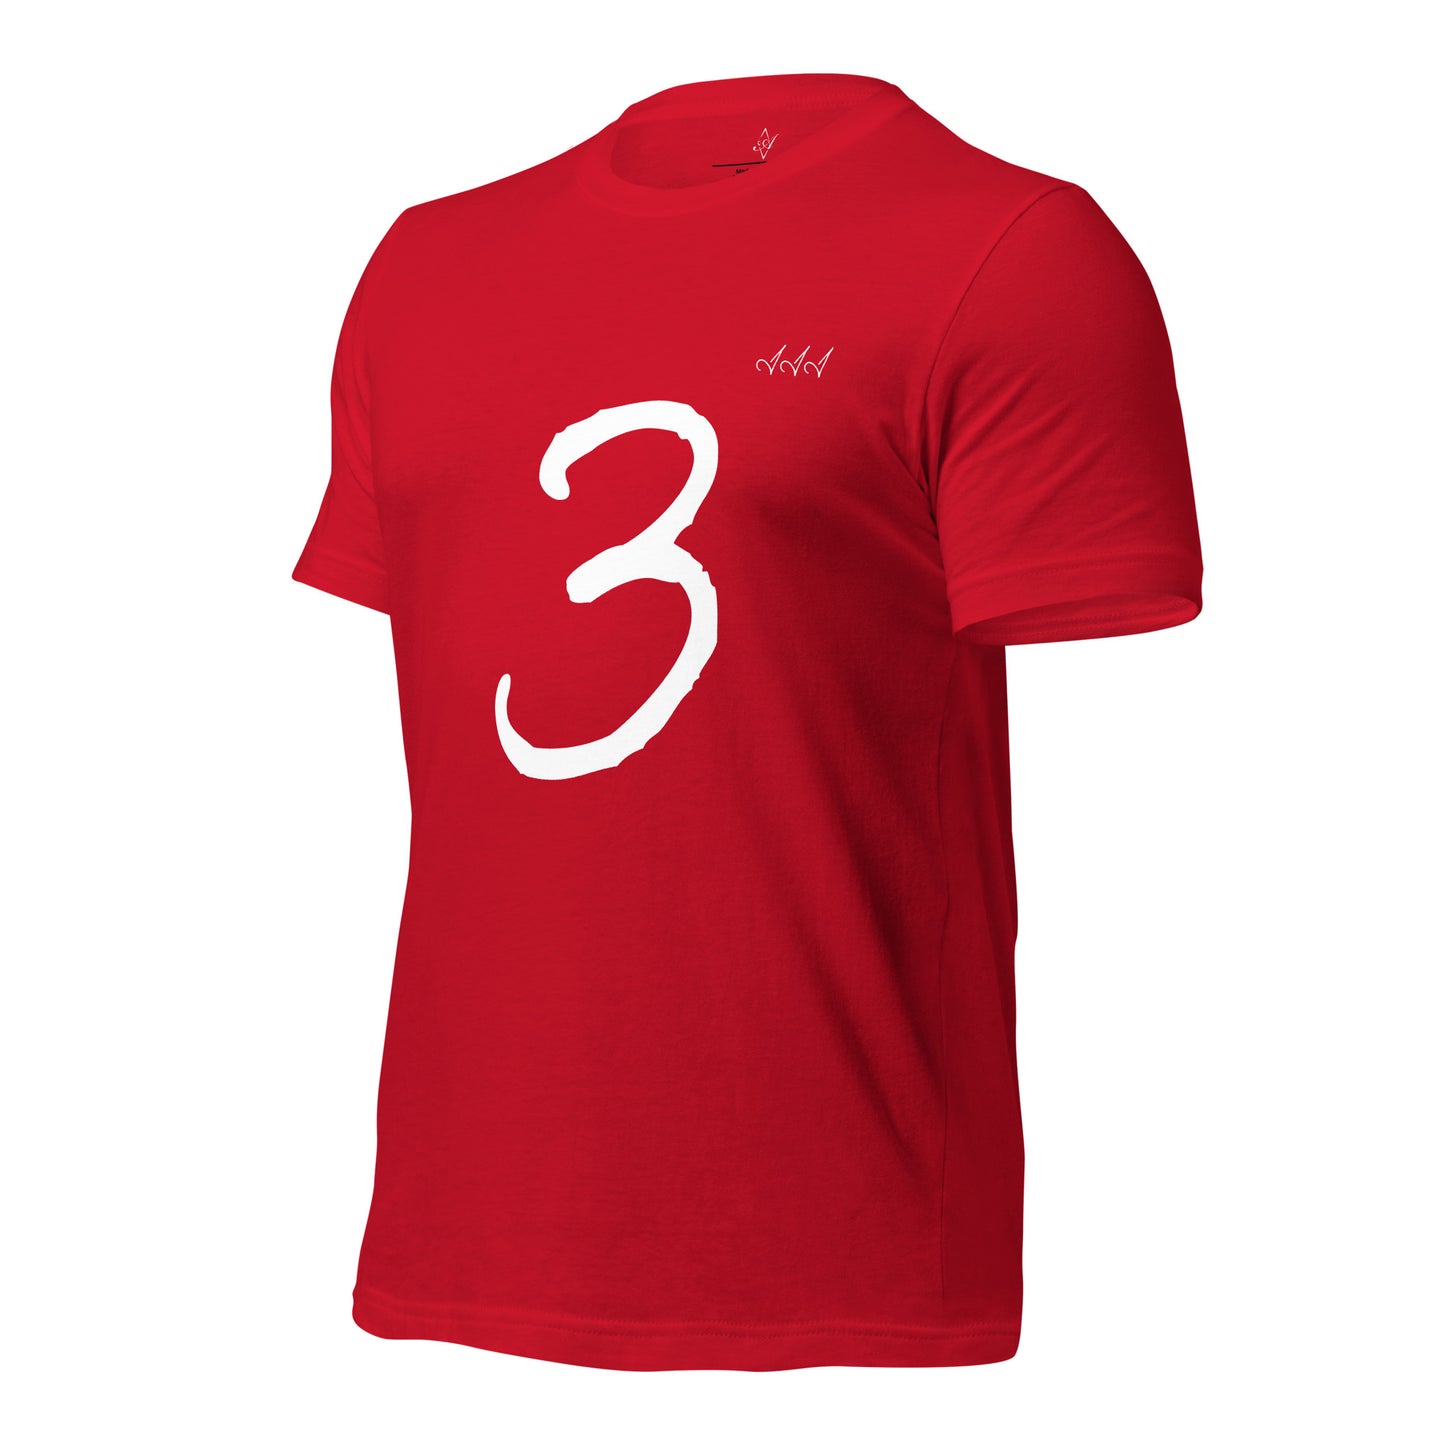 3 Numeral Unisex t-shirt